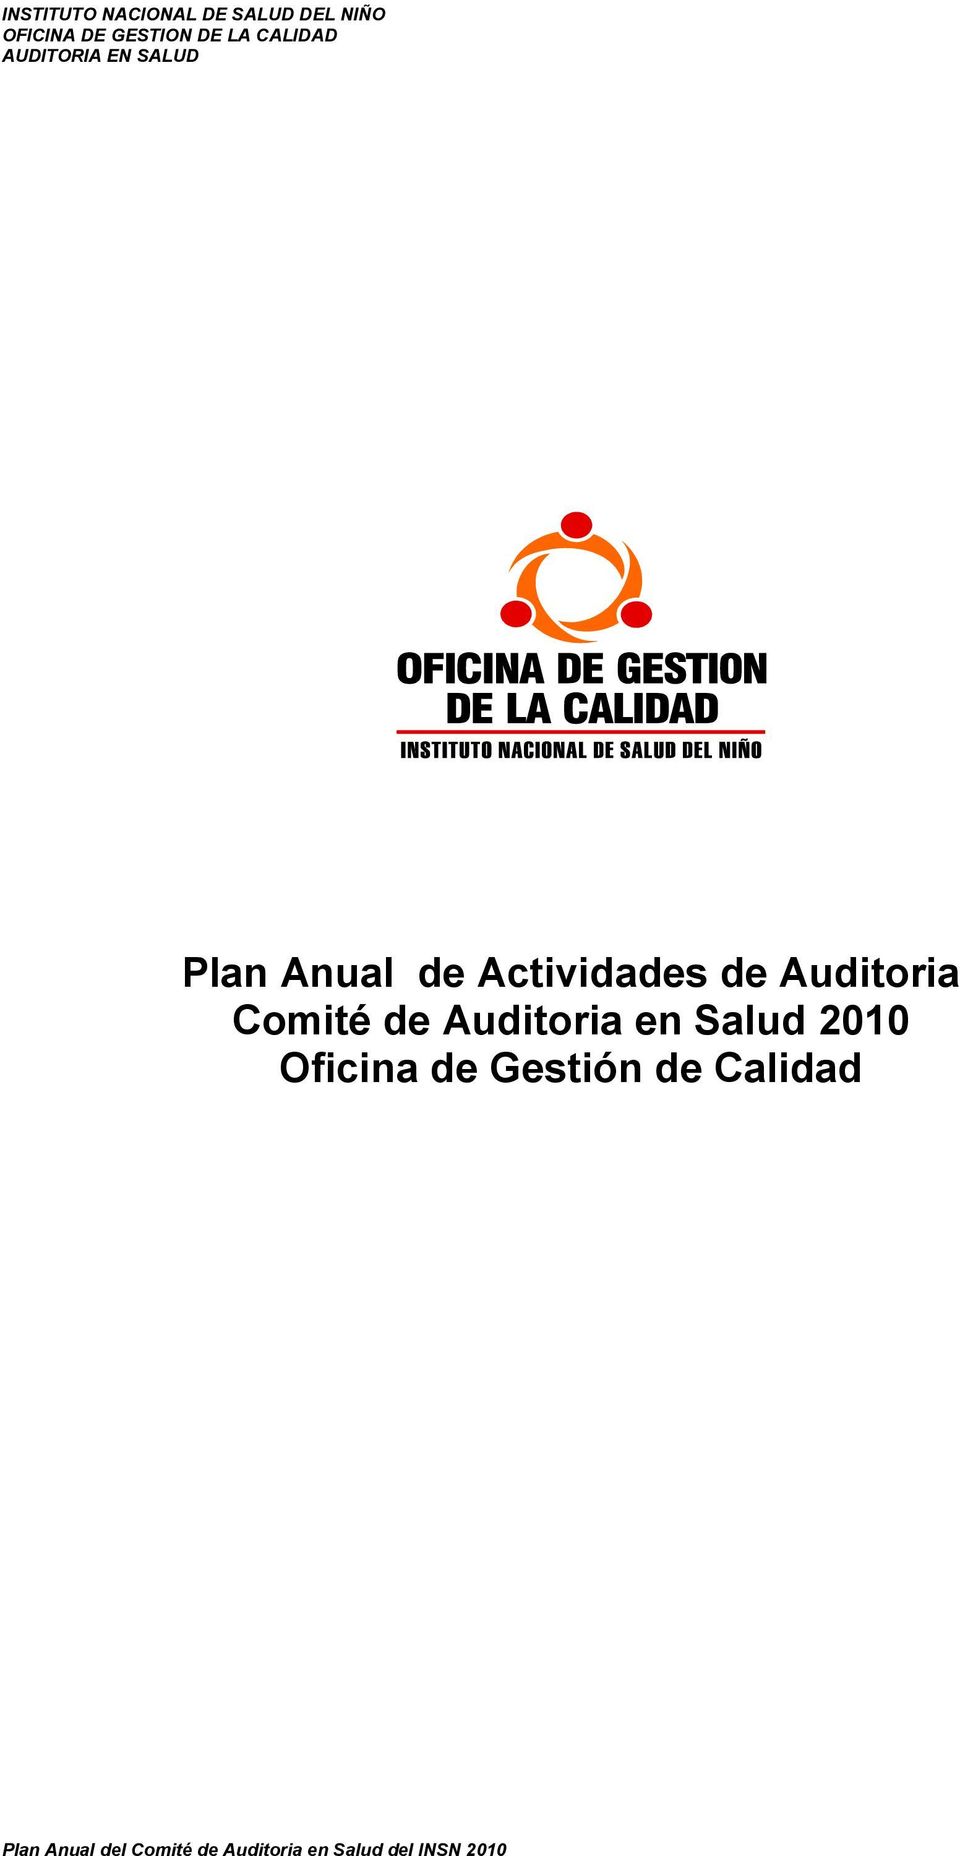 Auditoria en Salud 2010